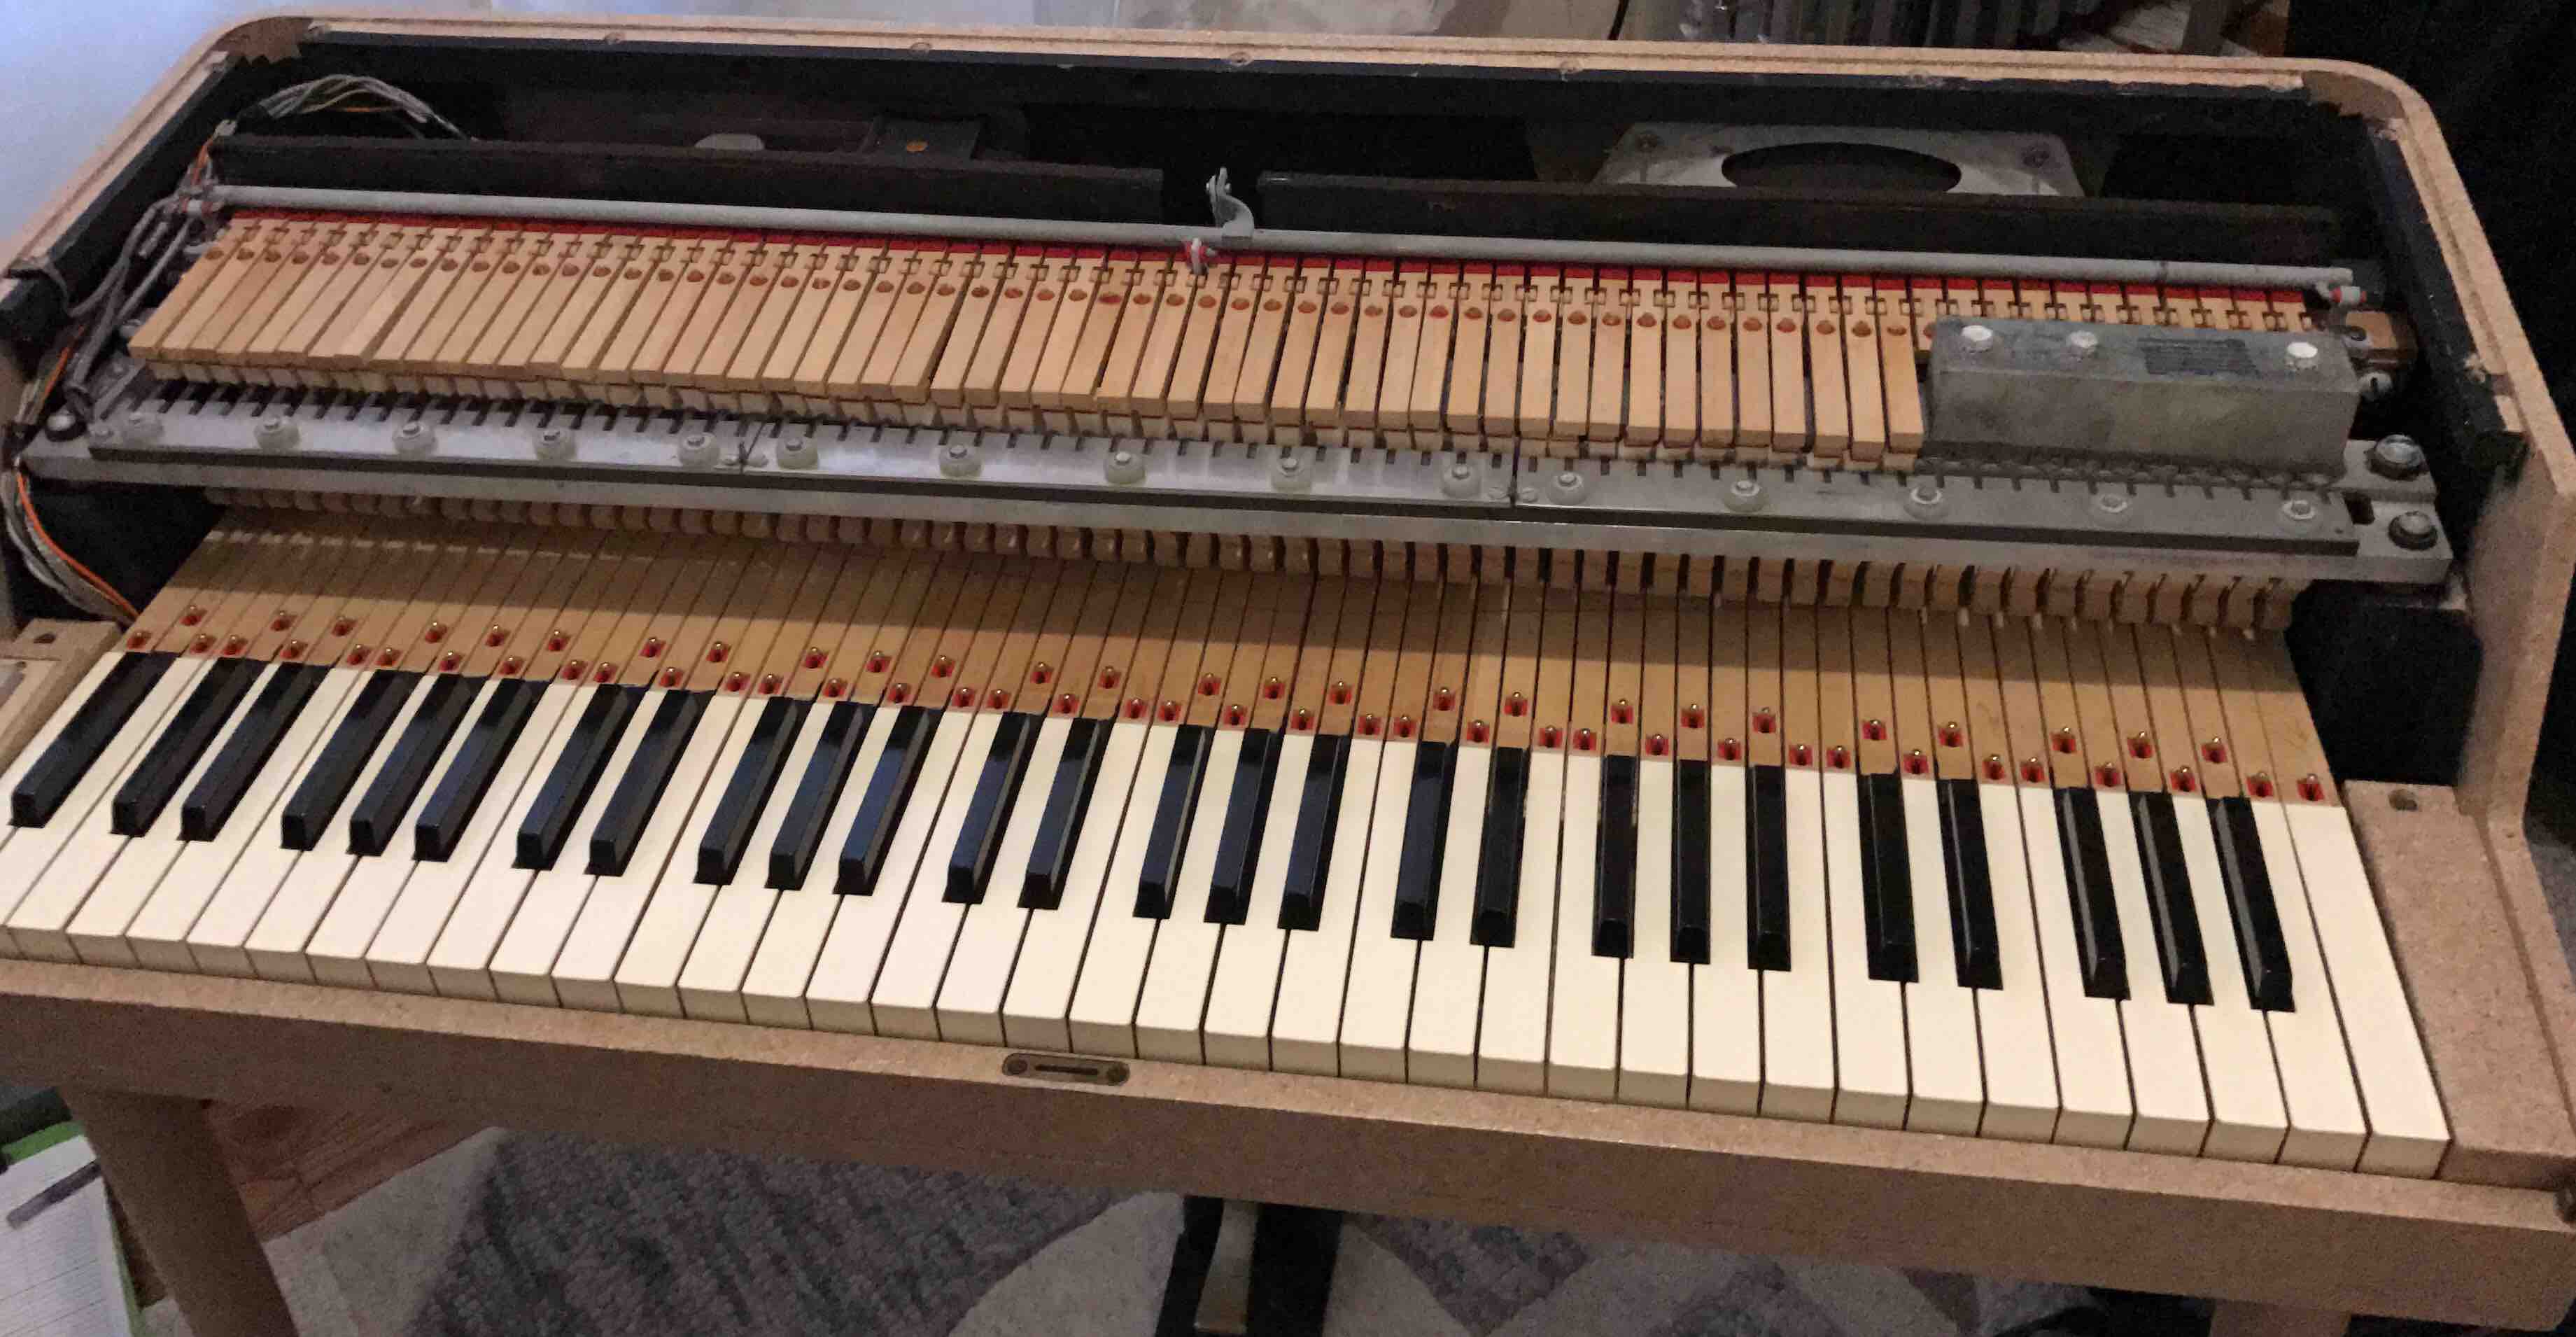 wurlitzer spinet piano tuning key